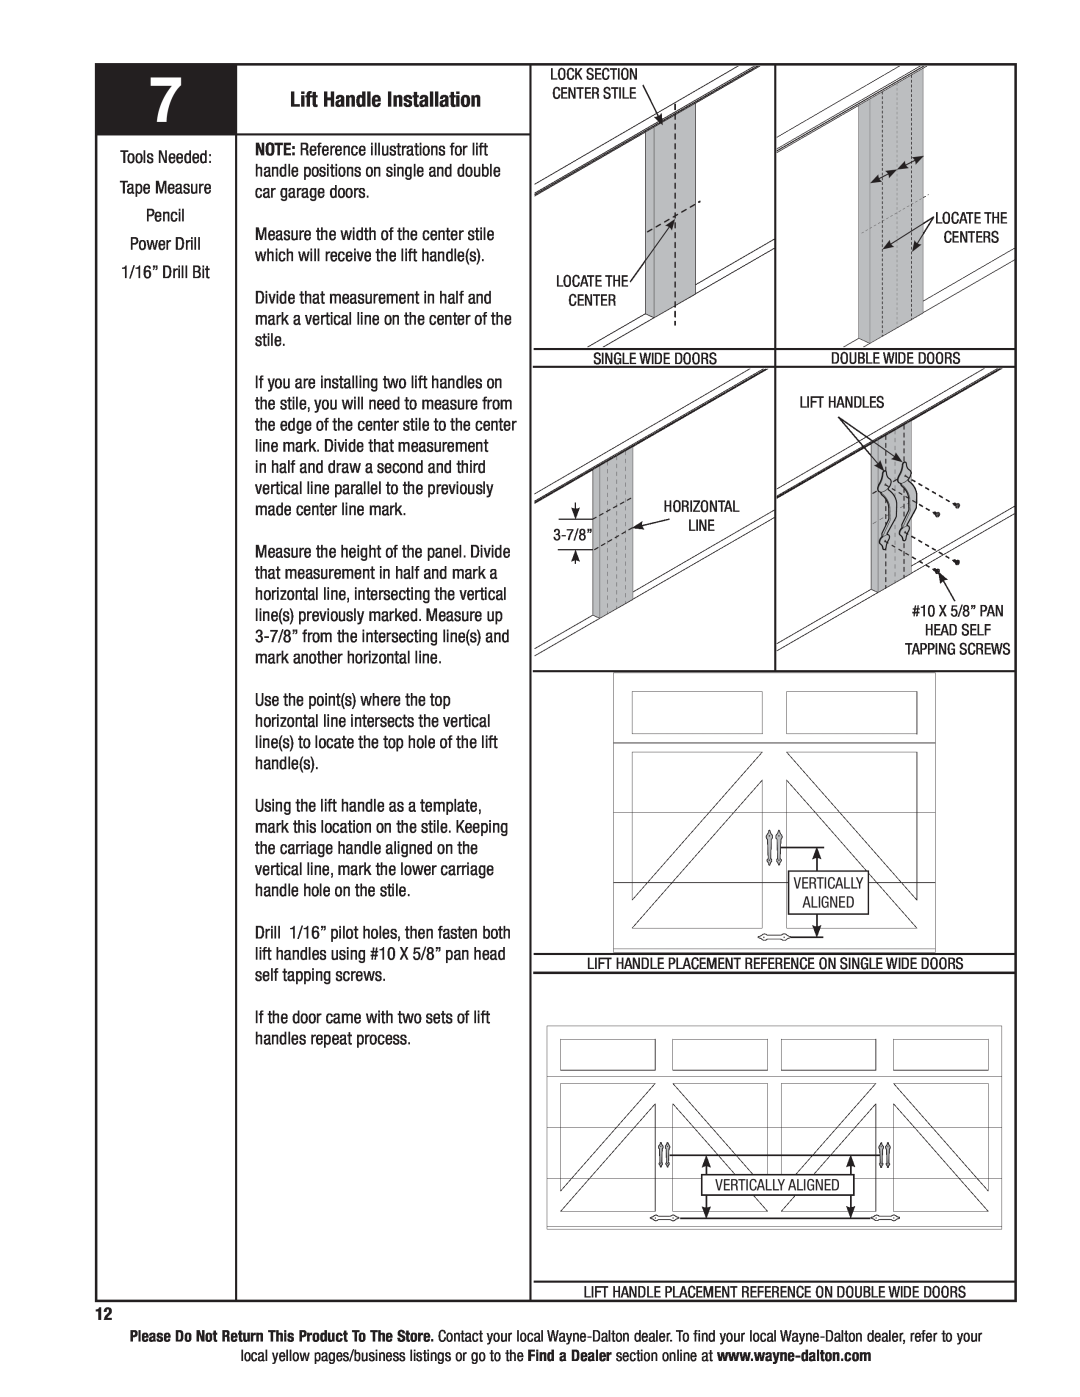 Wayne-Dalton 6100 installation instructions Lift Handle Installation 